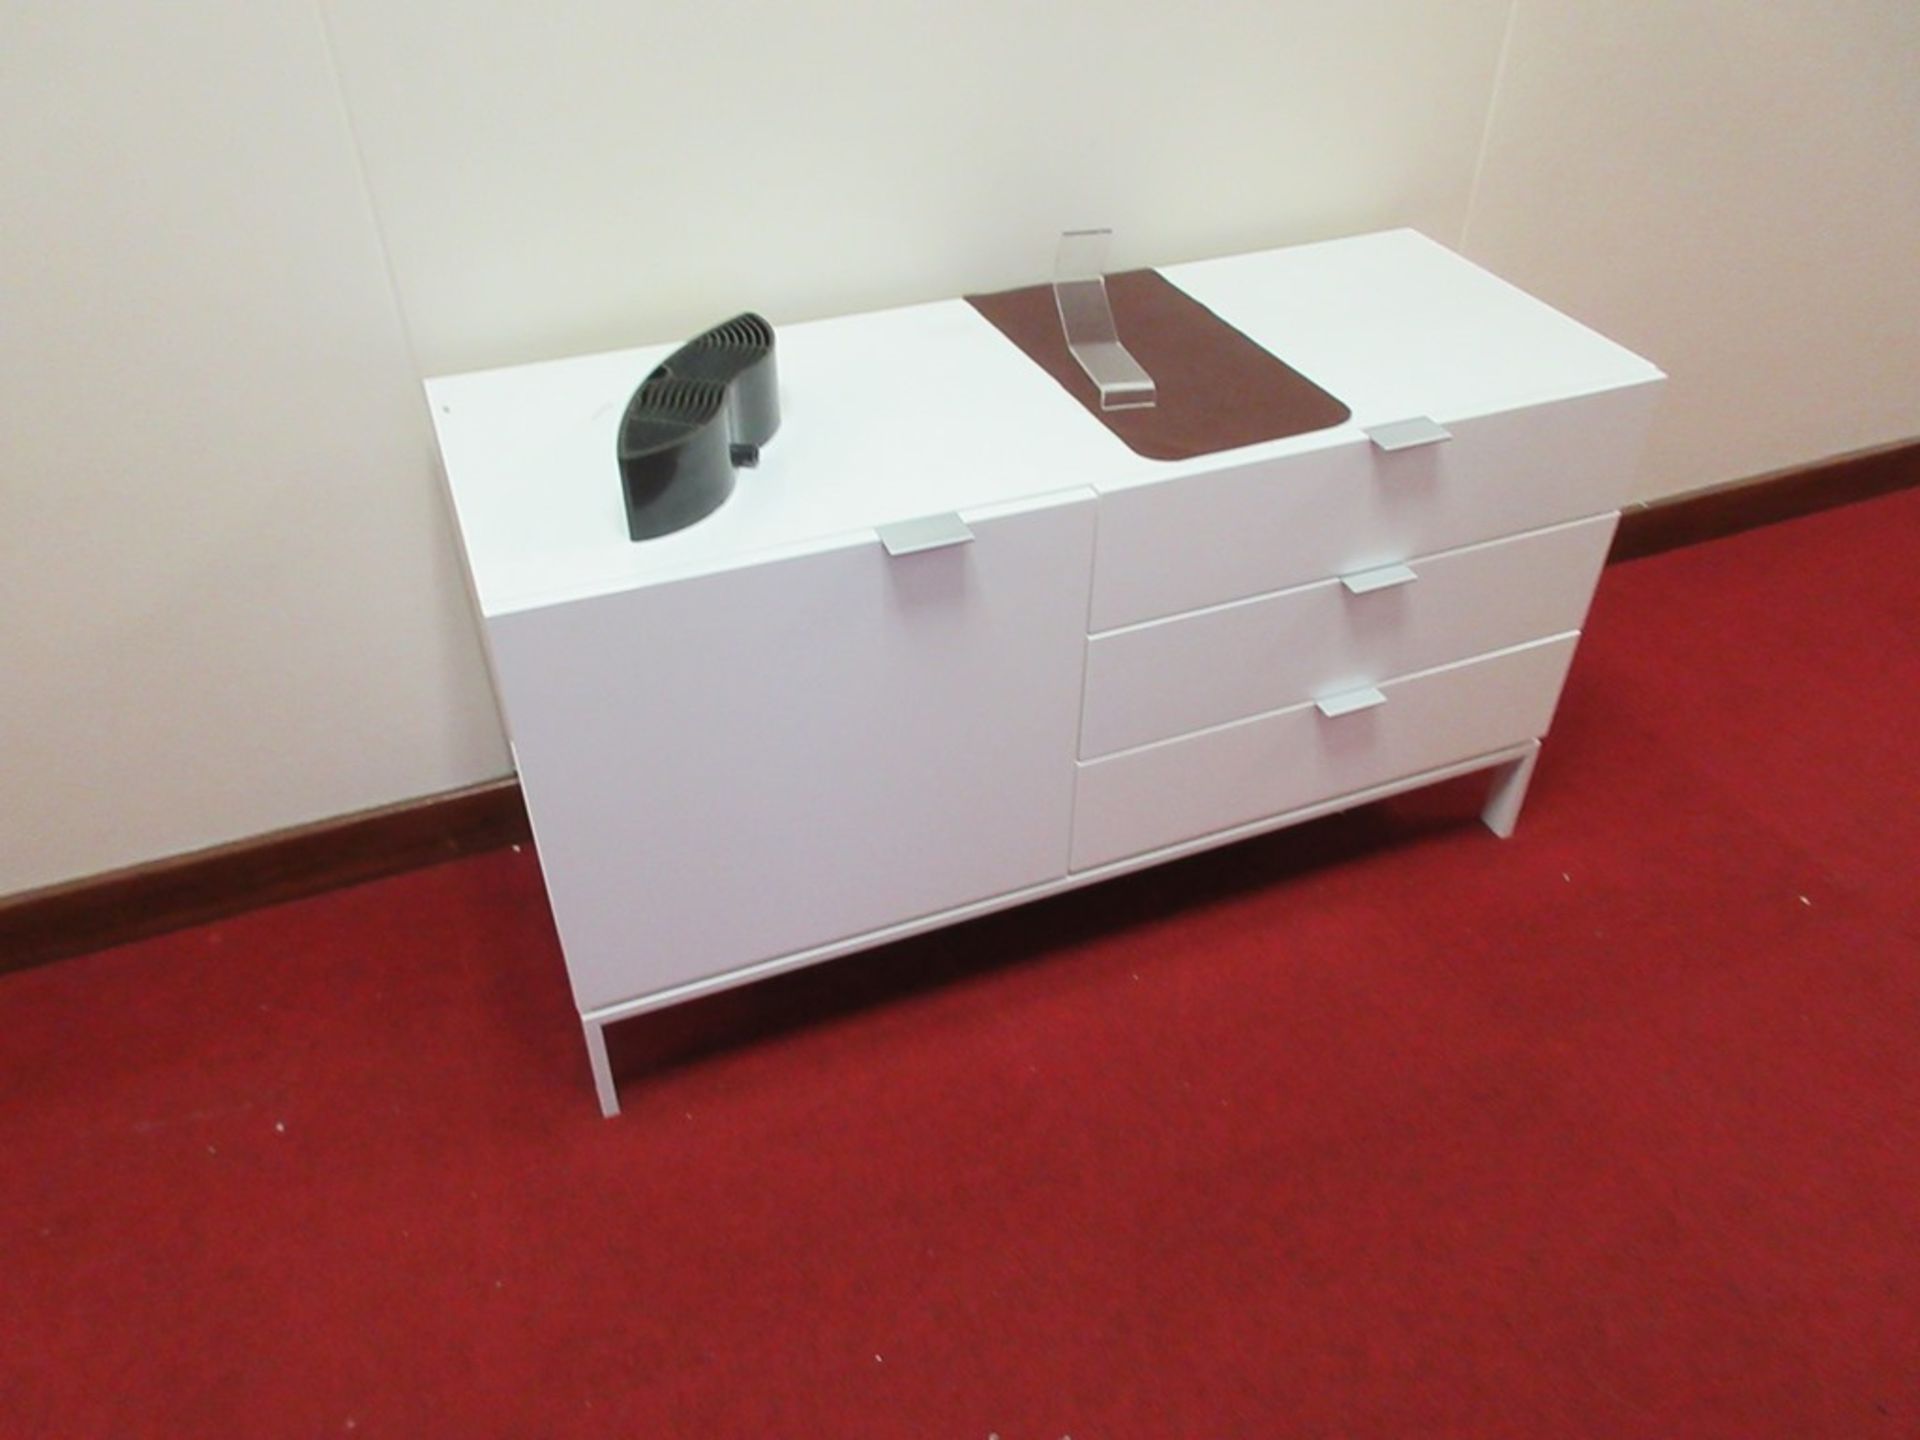 White laminate 3-drawer/ single door storage unit, 1 x white laminate display, 500mm x 500mm x